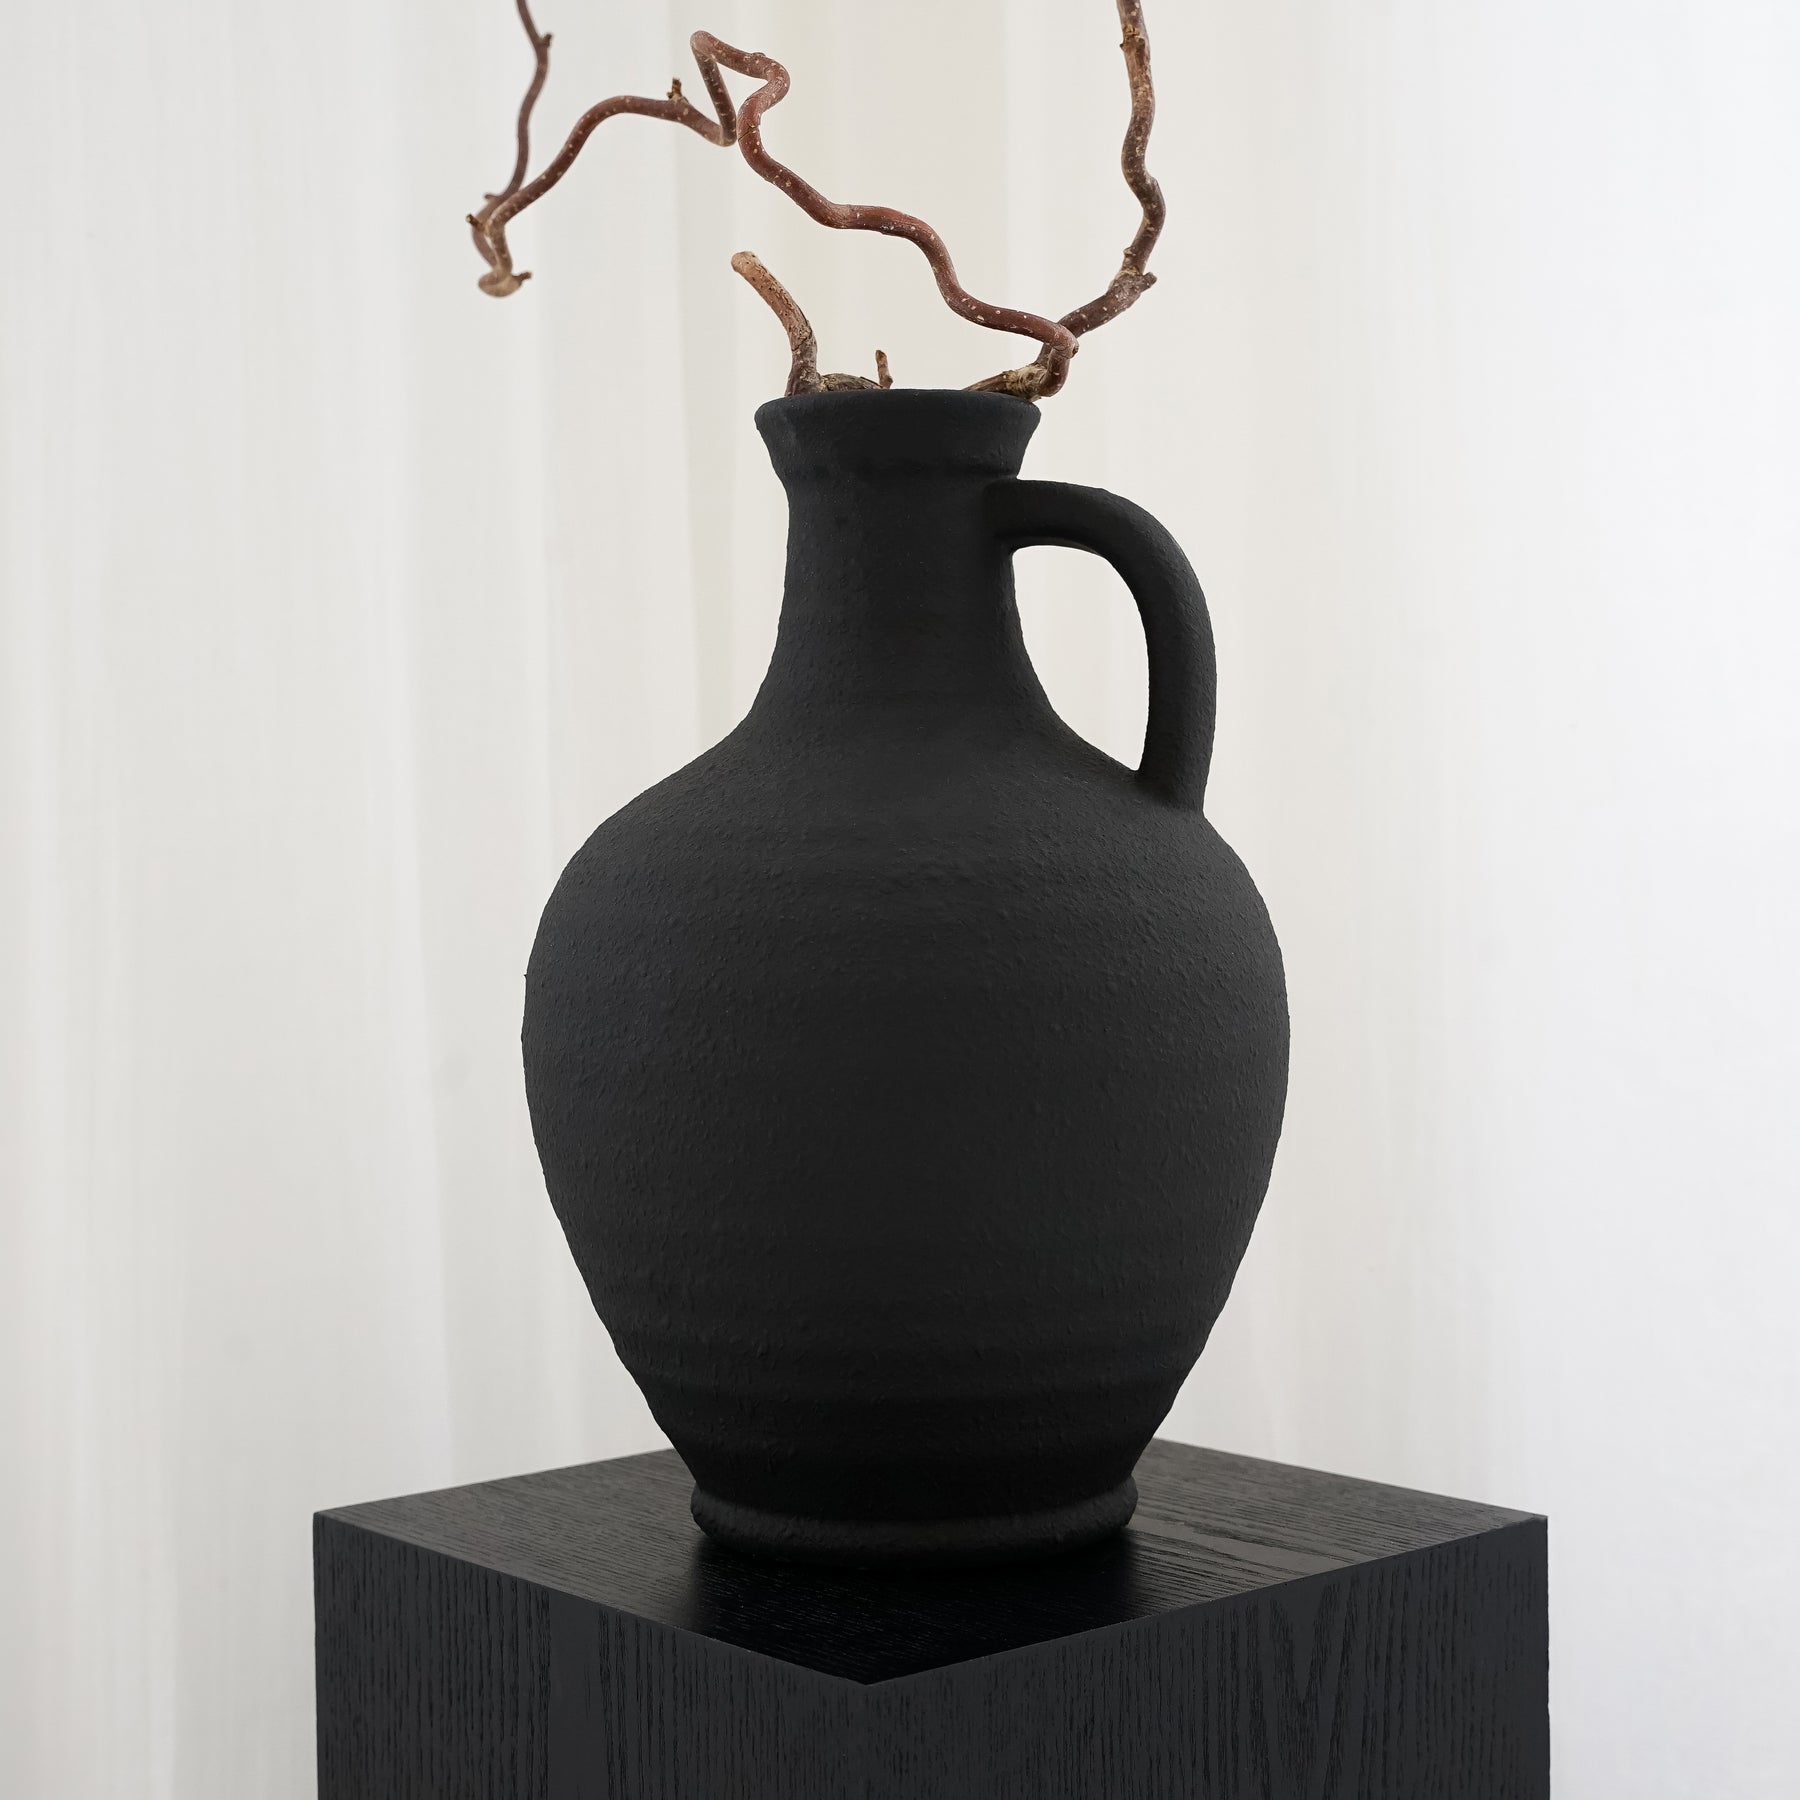 Alternate shot of Black Textured Ceramic Small Vase on plinth